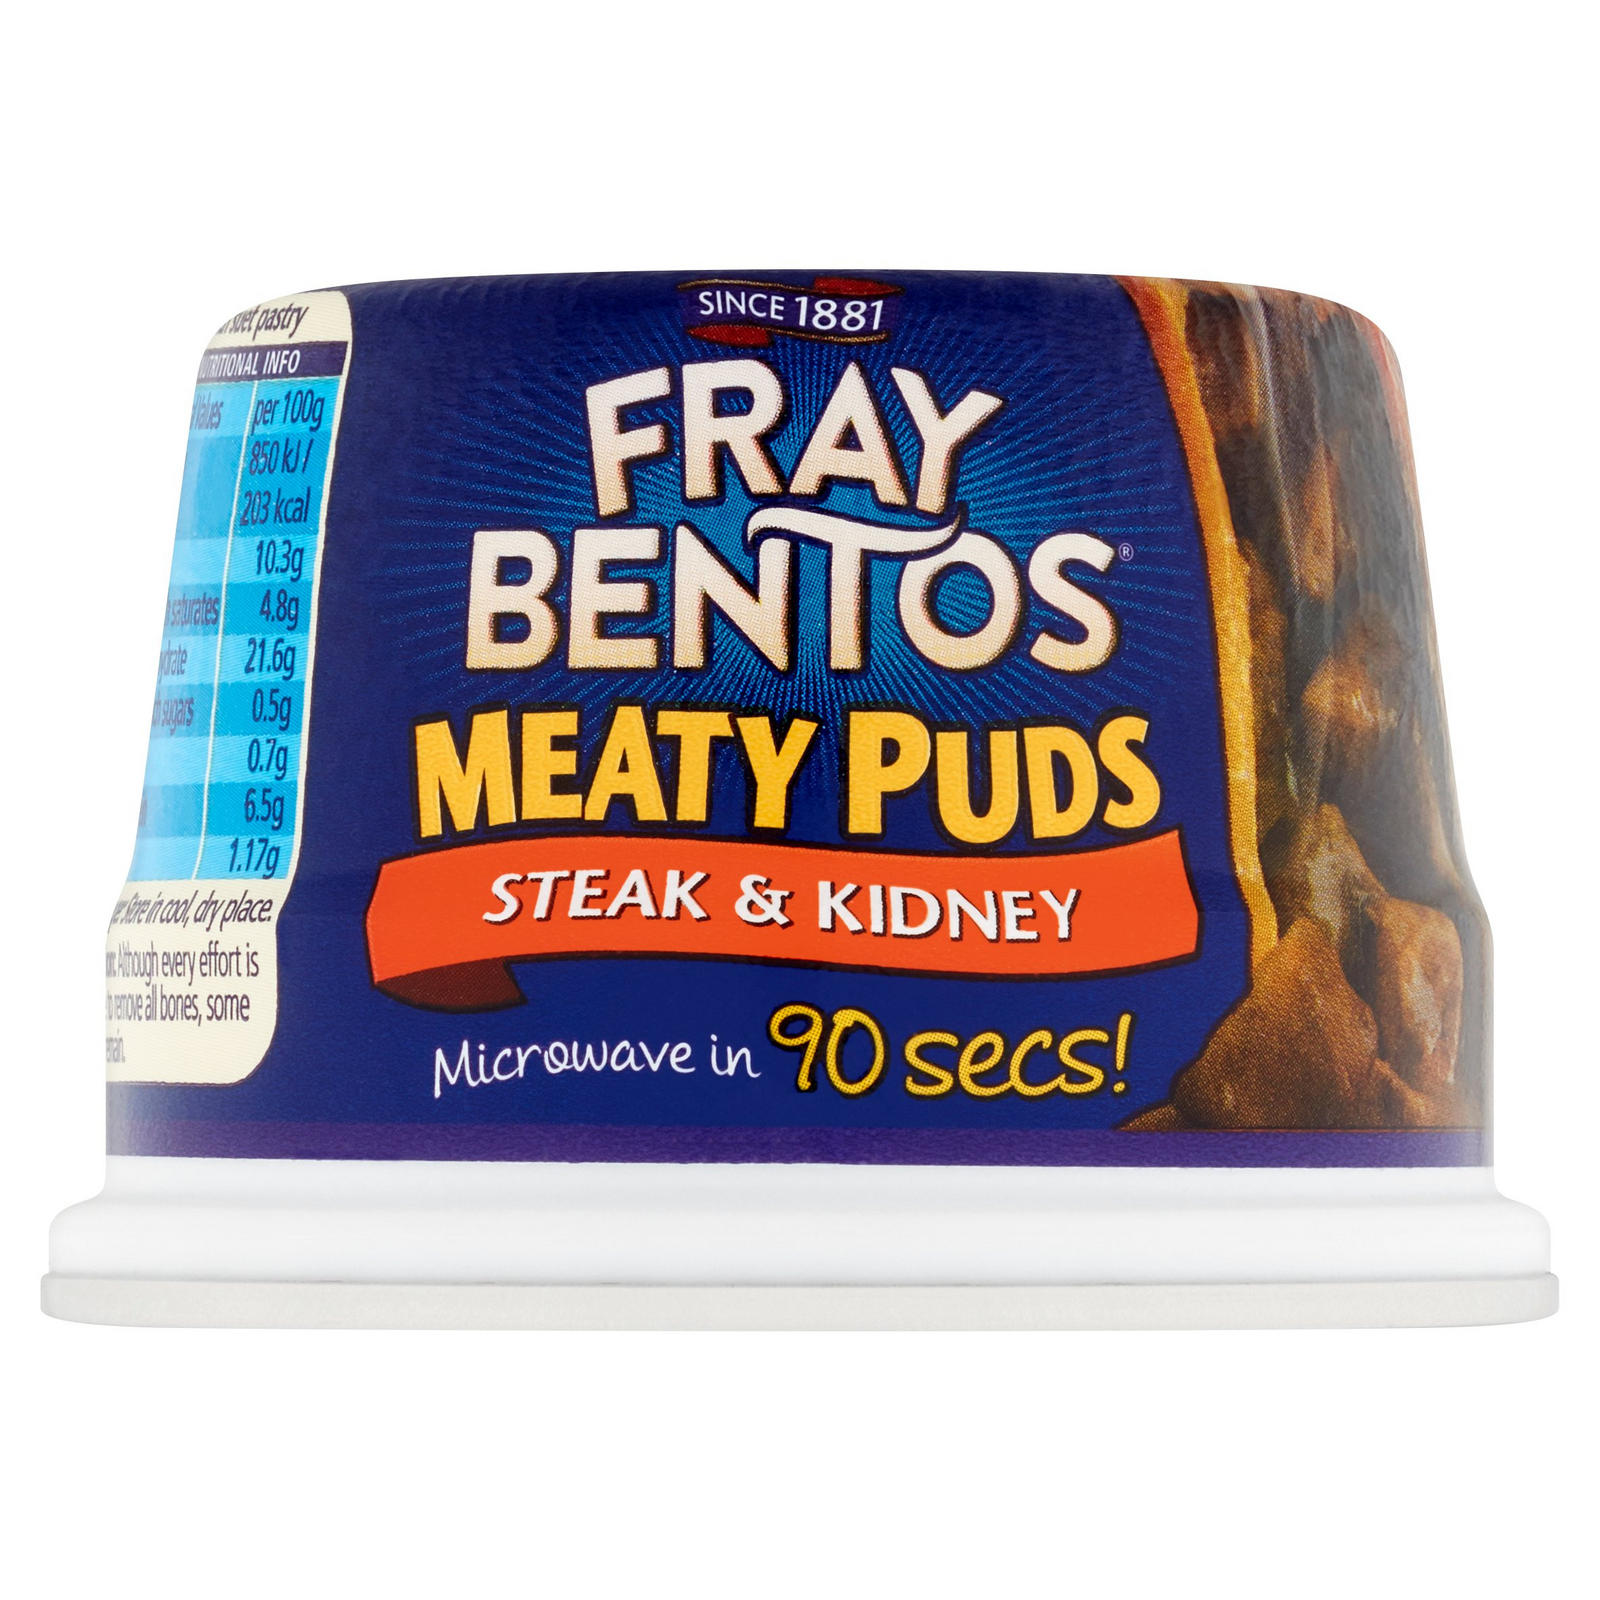 Fray Bentos Meaty Puds Steak & Kidney 200g | Tinned Meat ...